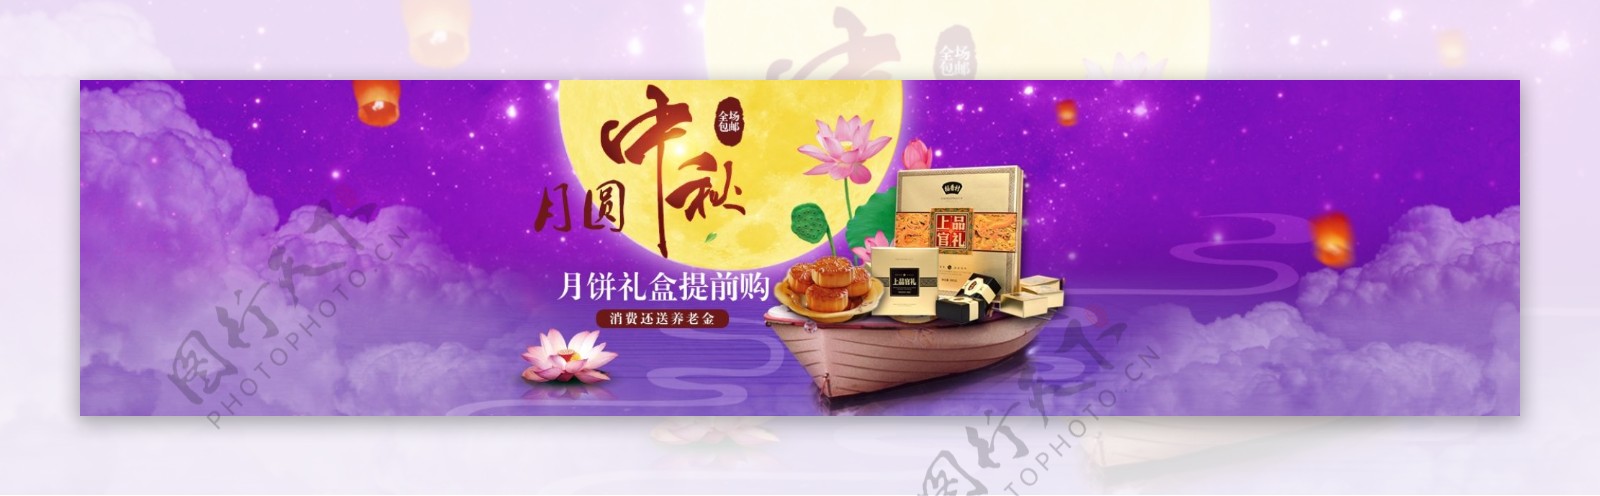 中秋节月饼海报banner